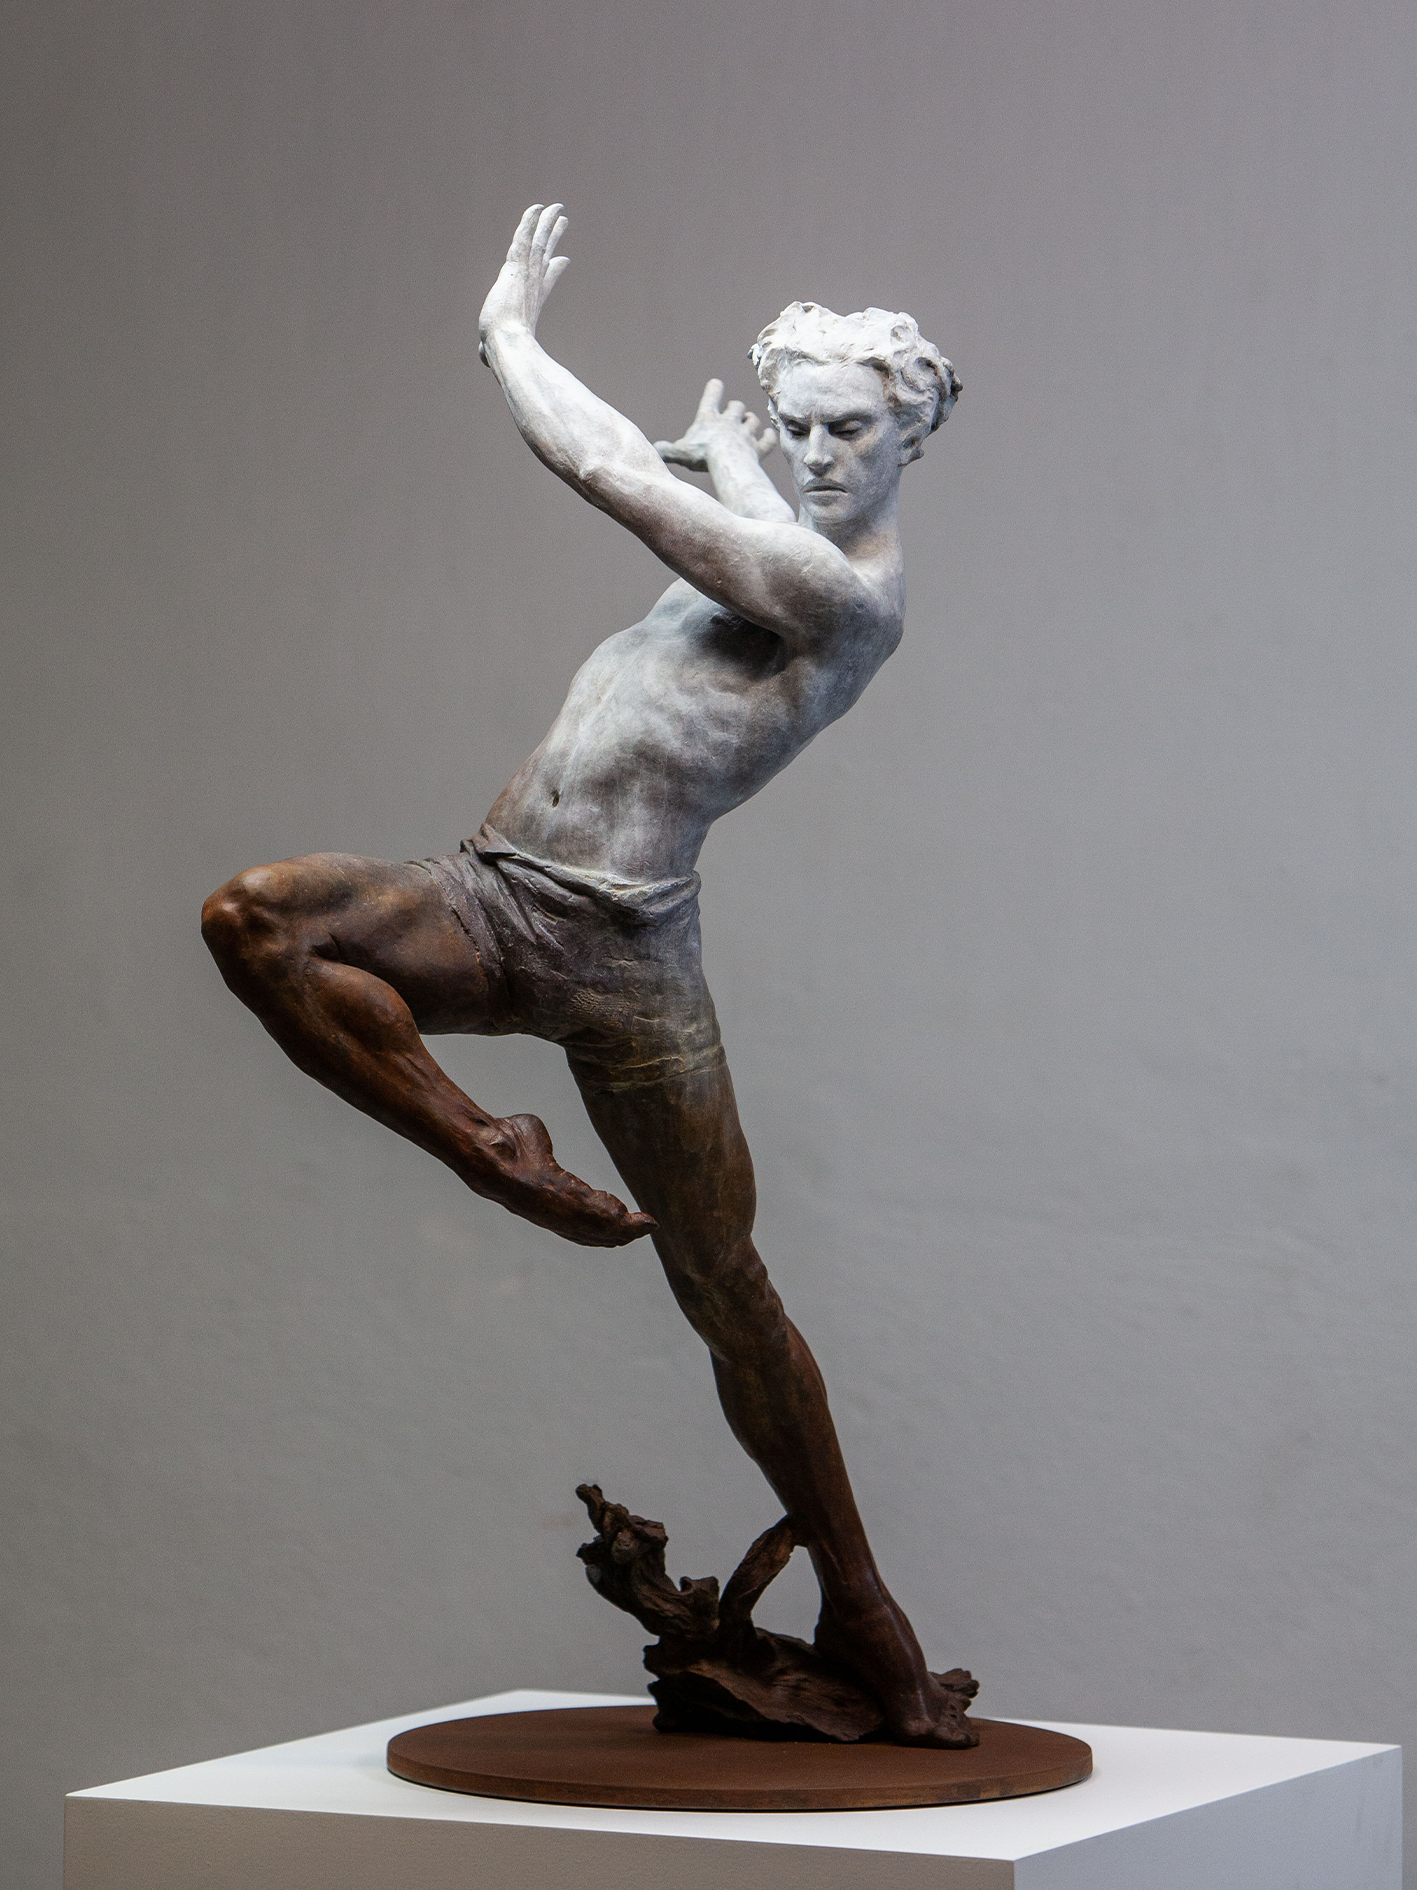 Coderch & Malavia Artiste 
Sculpture Bronze
Liber
@ Marciano Contemporary